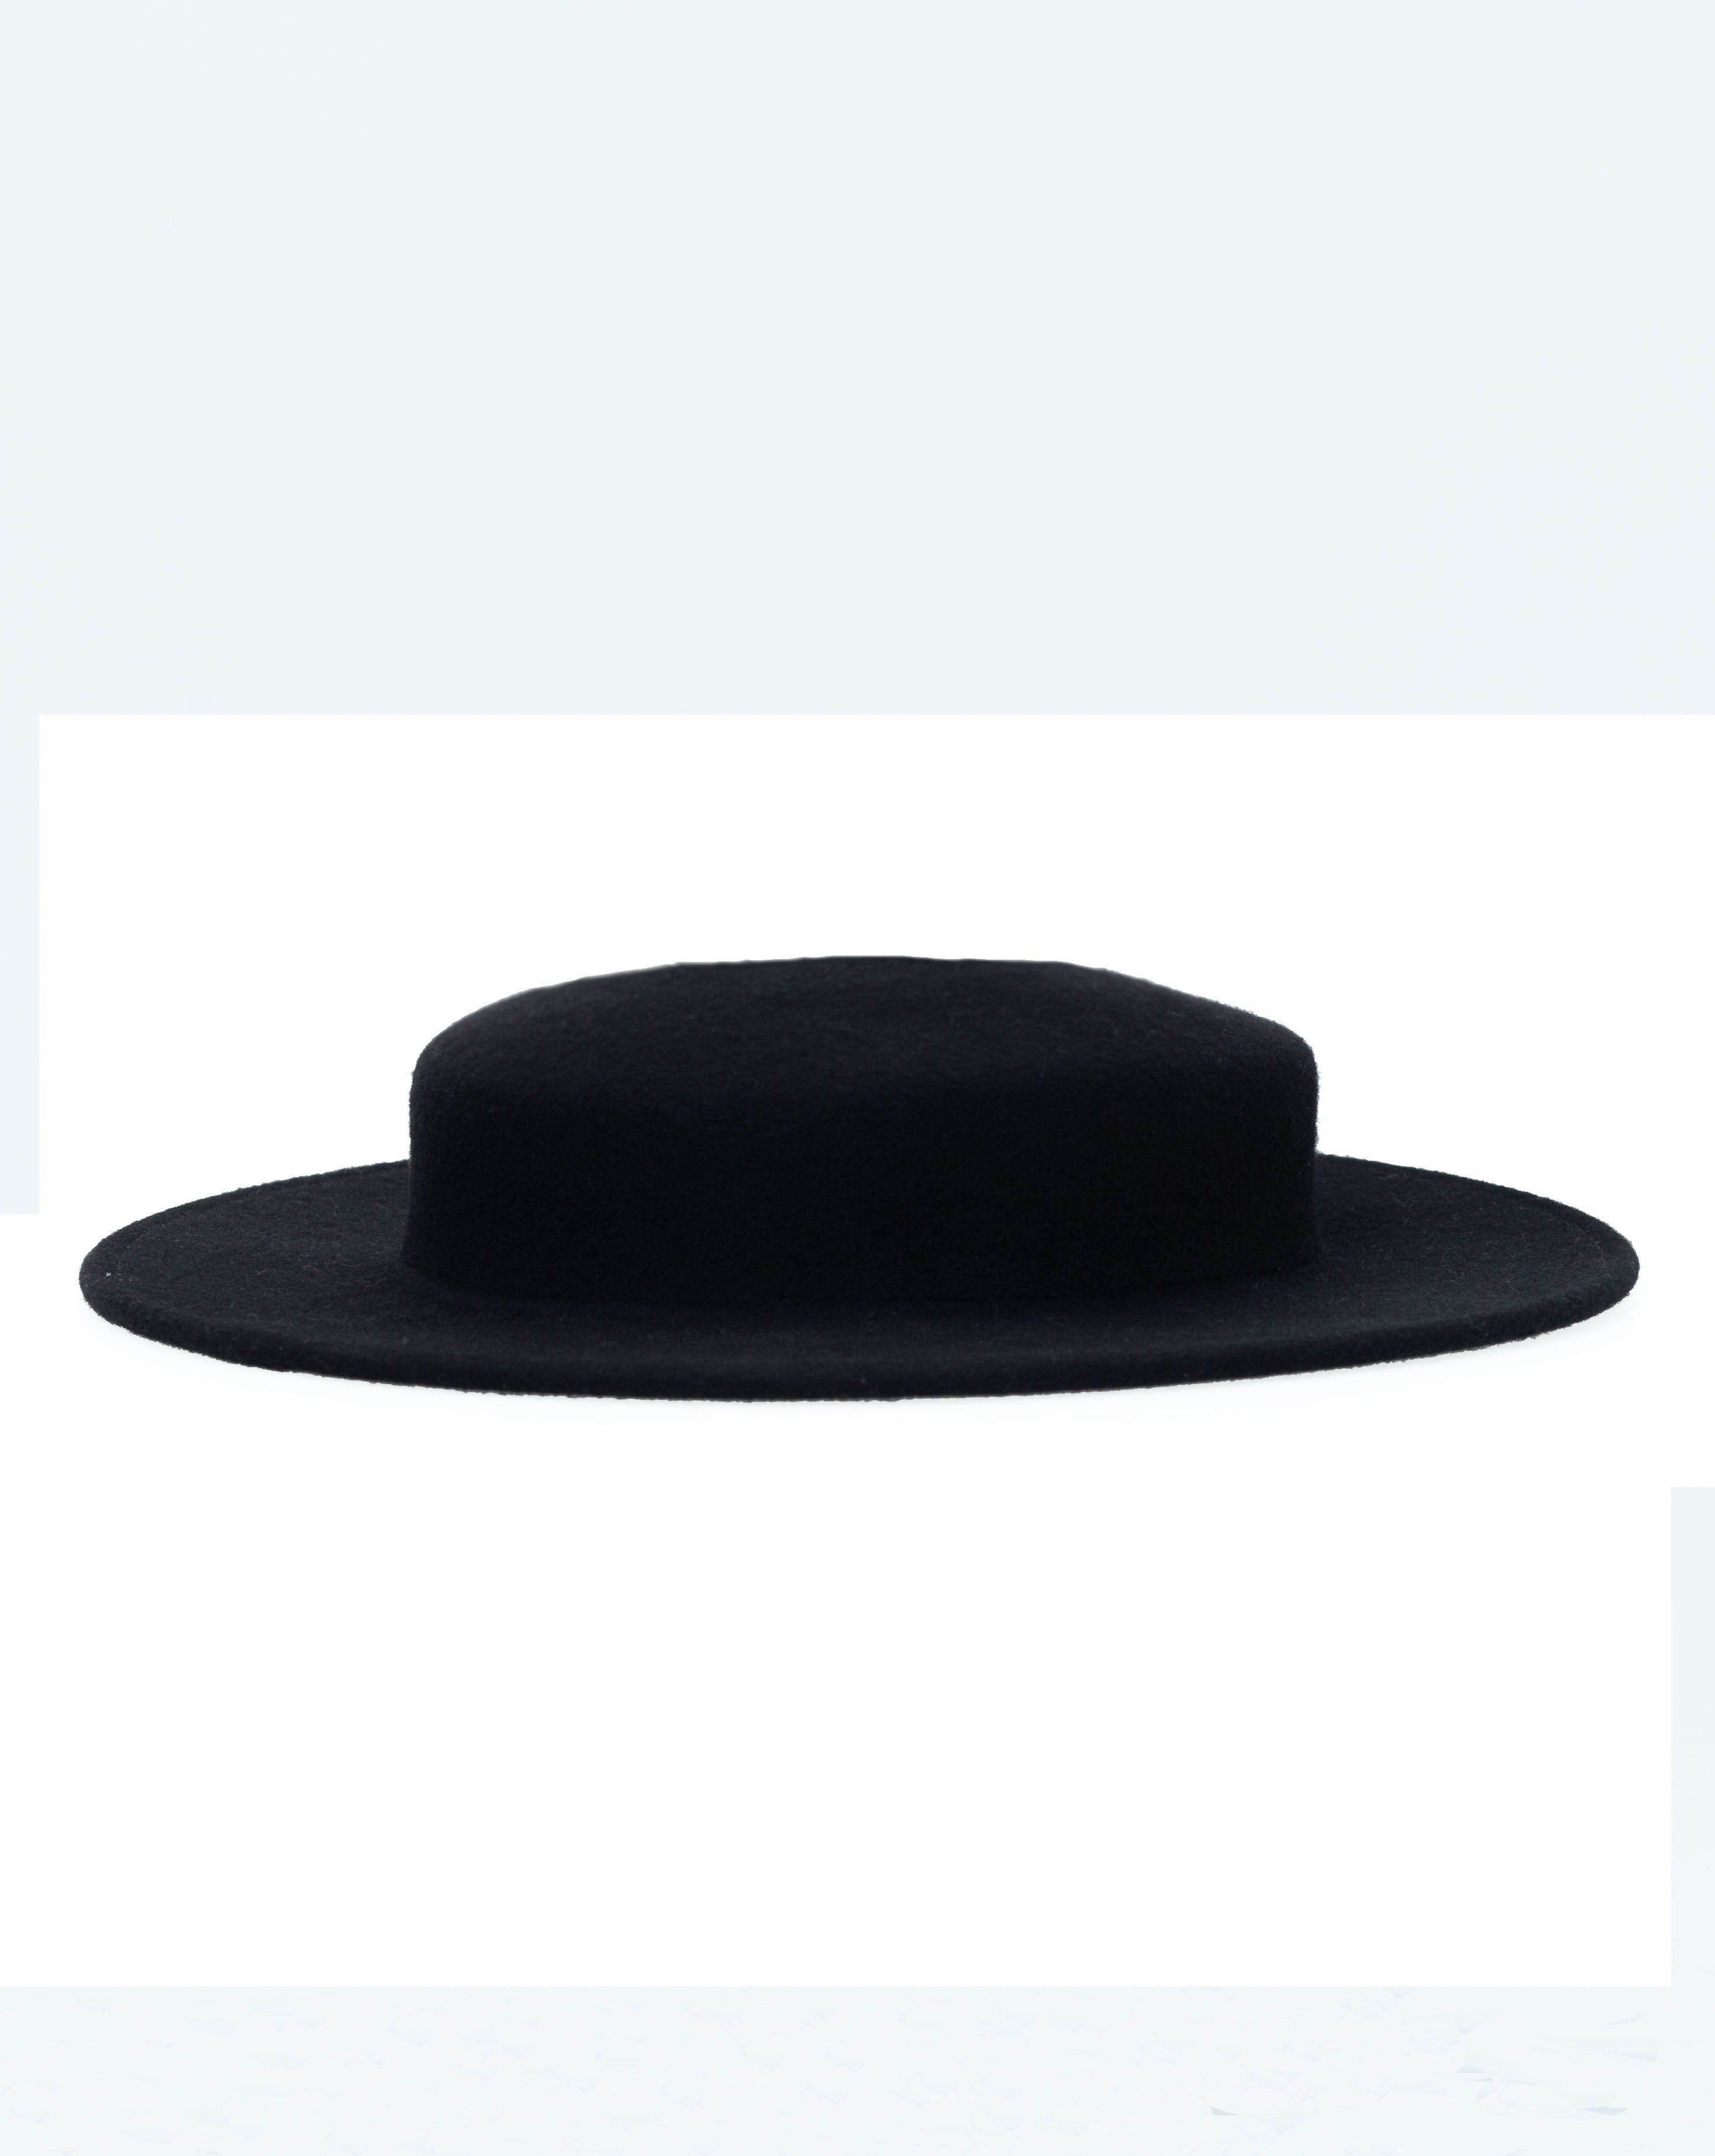 Krystyna-ModulaR-Boater-Hat-in-Black-Wool-Felt-BY-OBJECT-_-DAWN.jpg